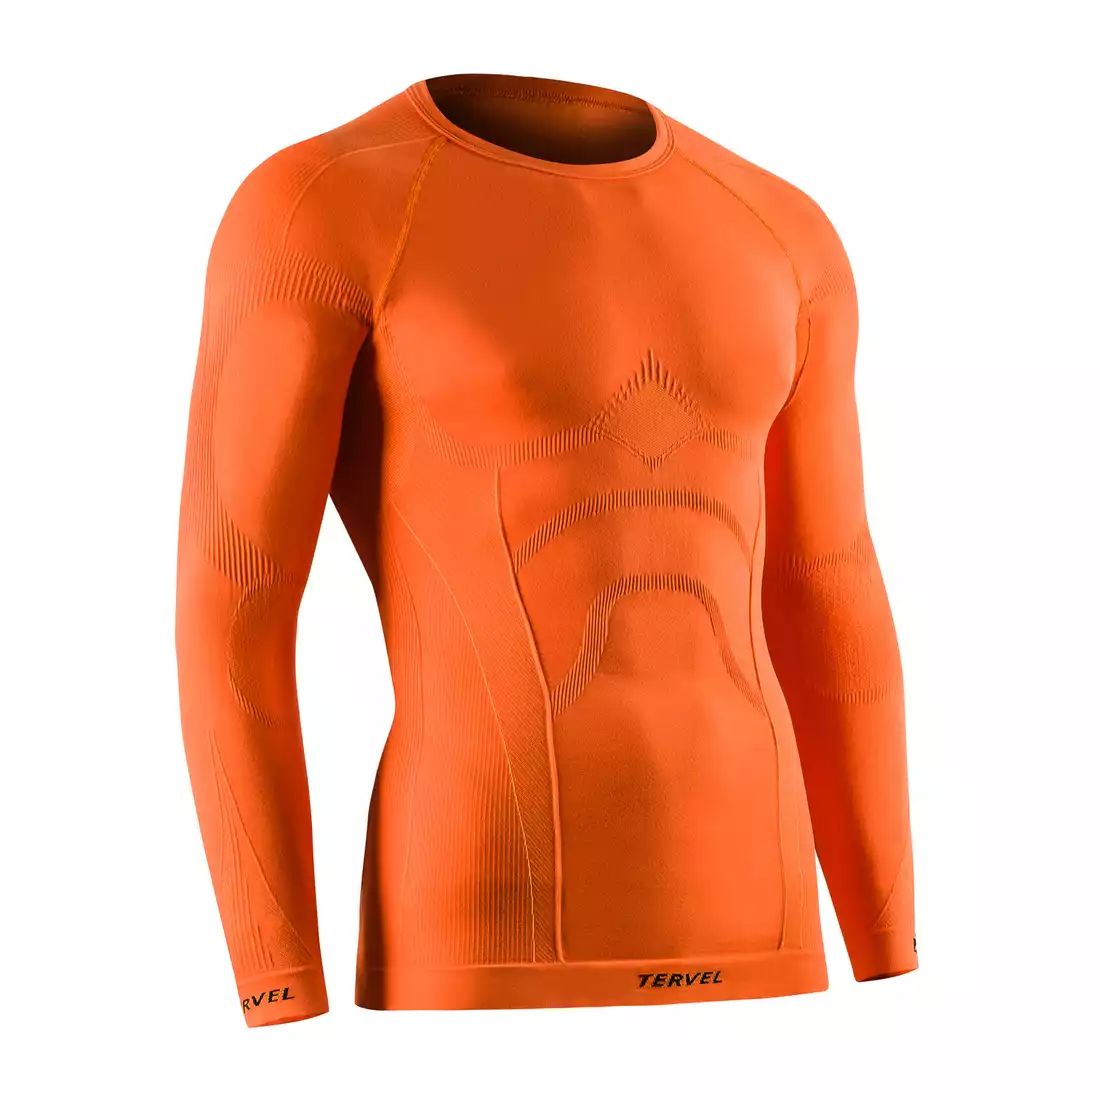 TERVEL COMFORTLINE 1002 - męska koszulka termoaktywna, długi rękaw, kolor: Pomarańcz